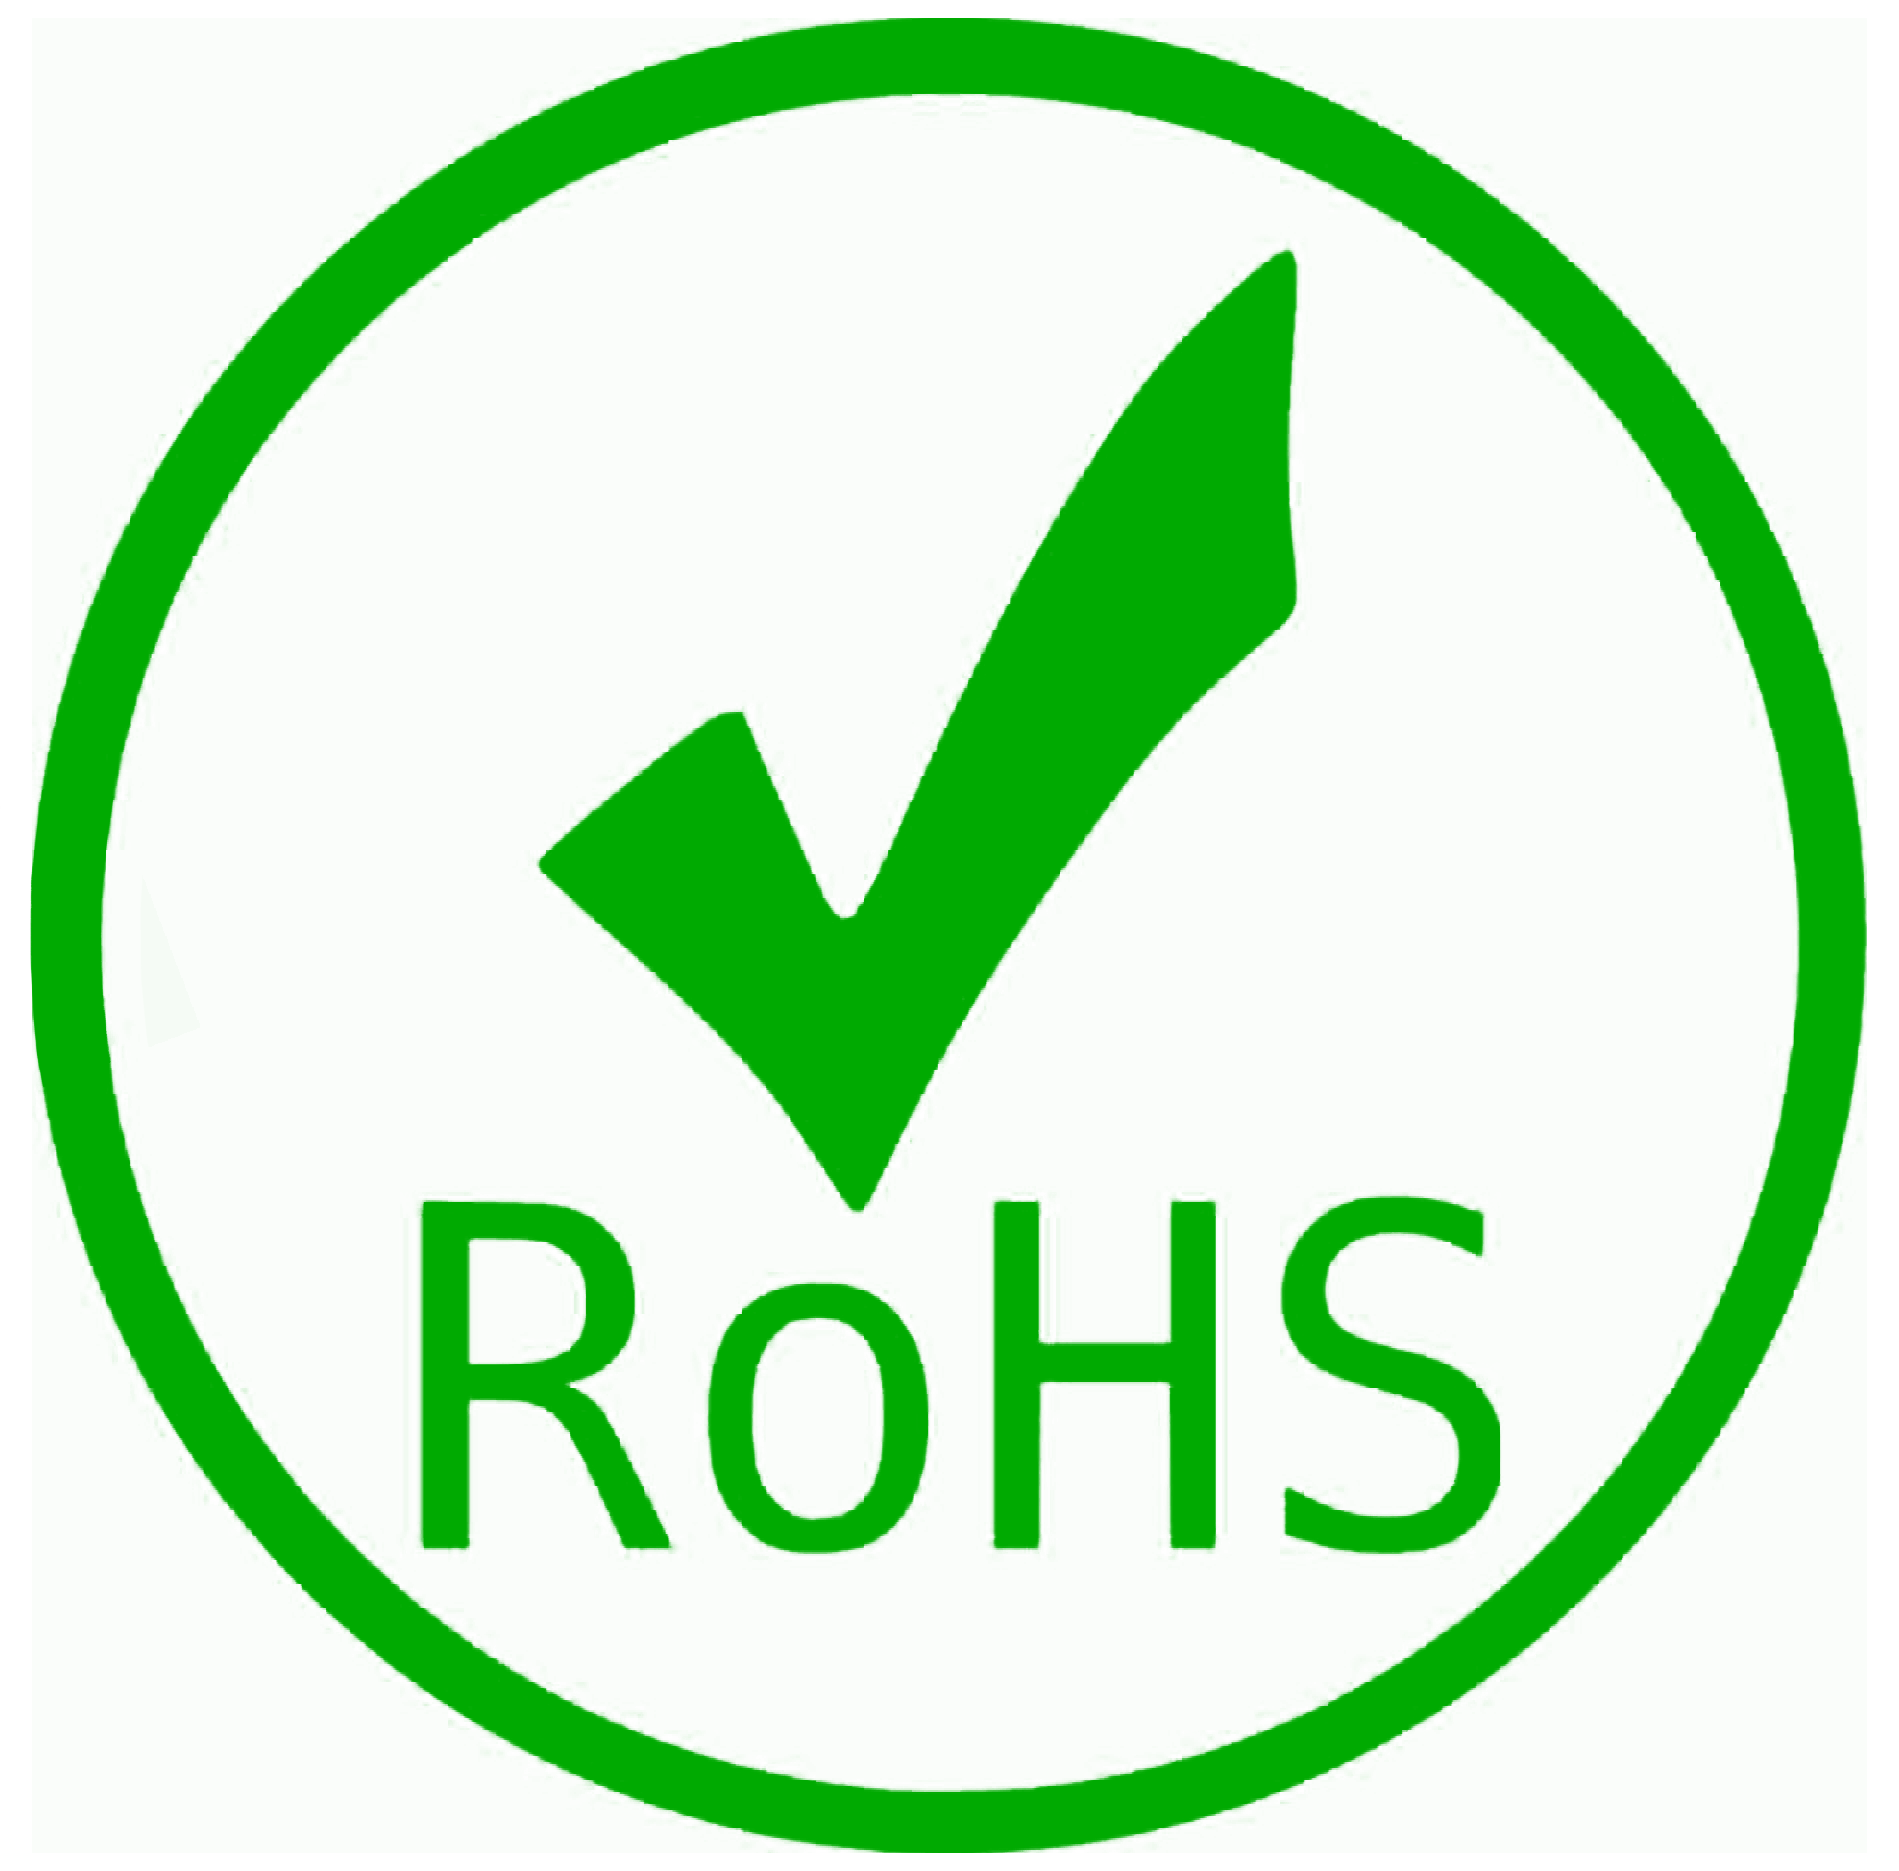 HTC-RoHS-logo.png